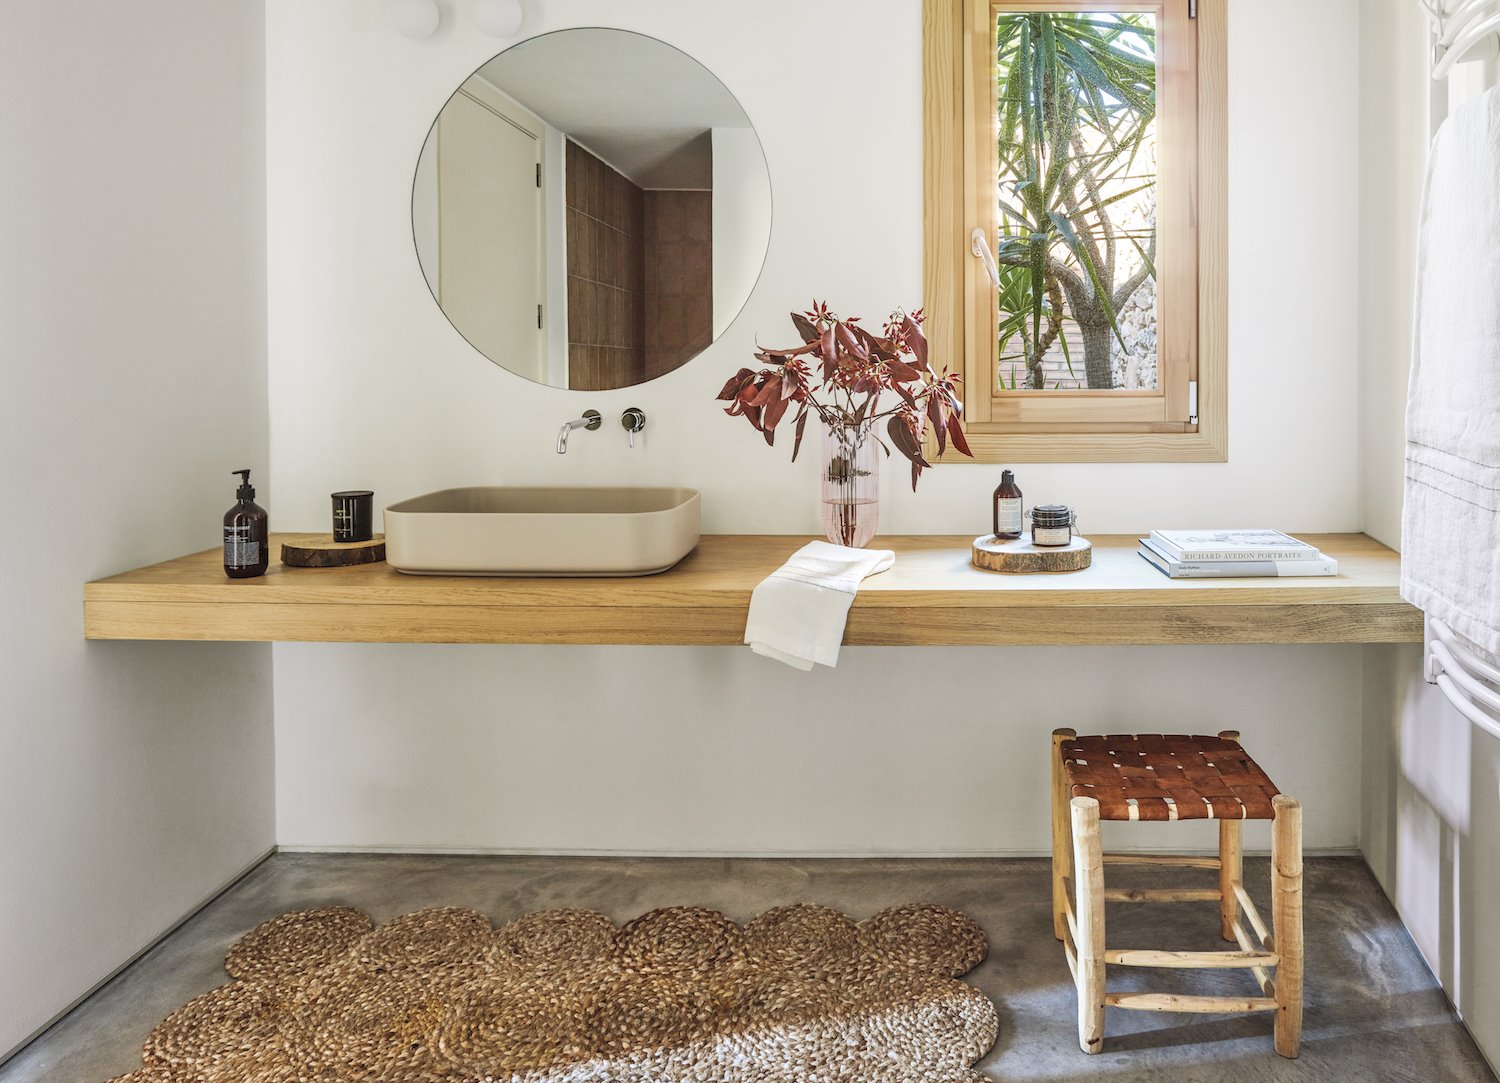 ban~o moderno con espejo circular y mueble de lavabo rectangular